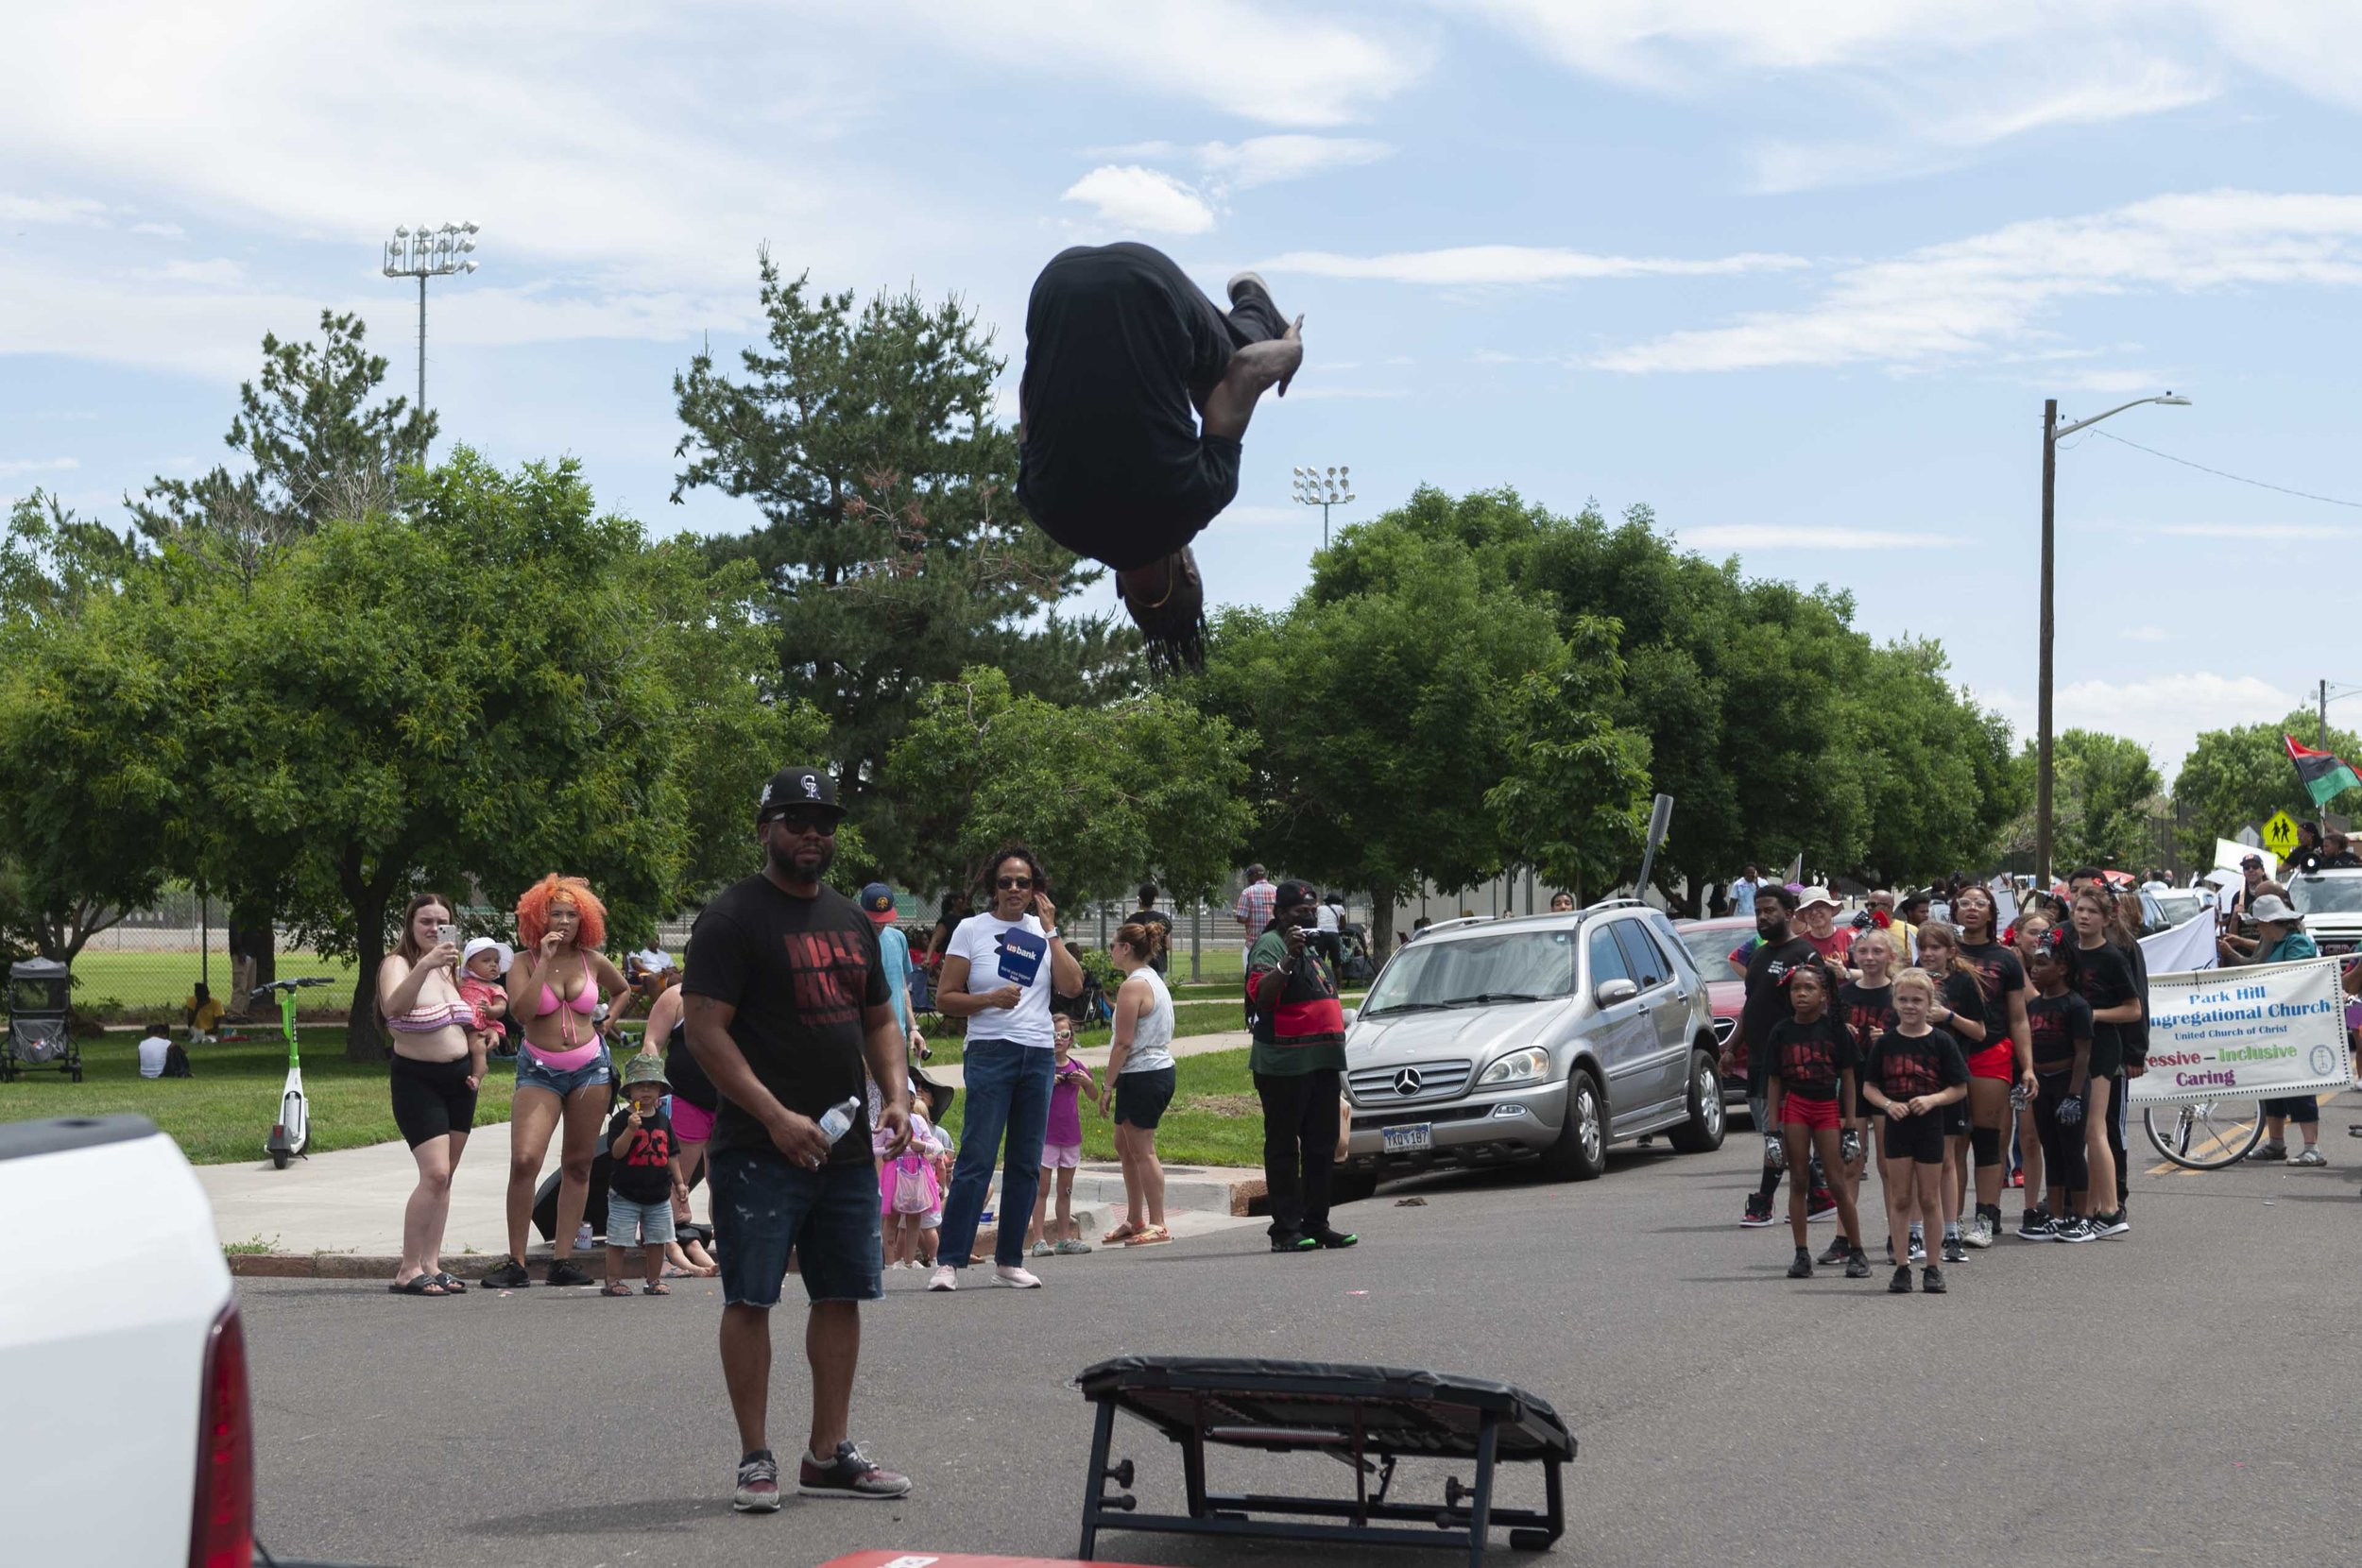  Members of ‘Mile High Tumblers 5280’ perform acrobatic flips during Denver’s   Juneteenth   celebration. 